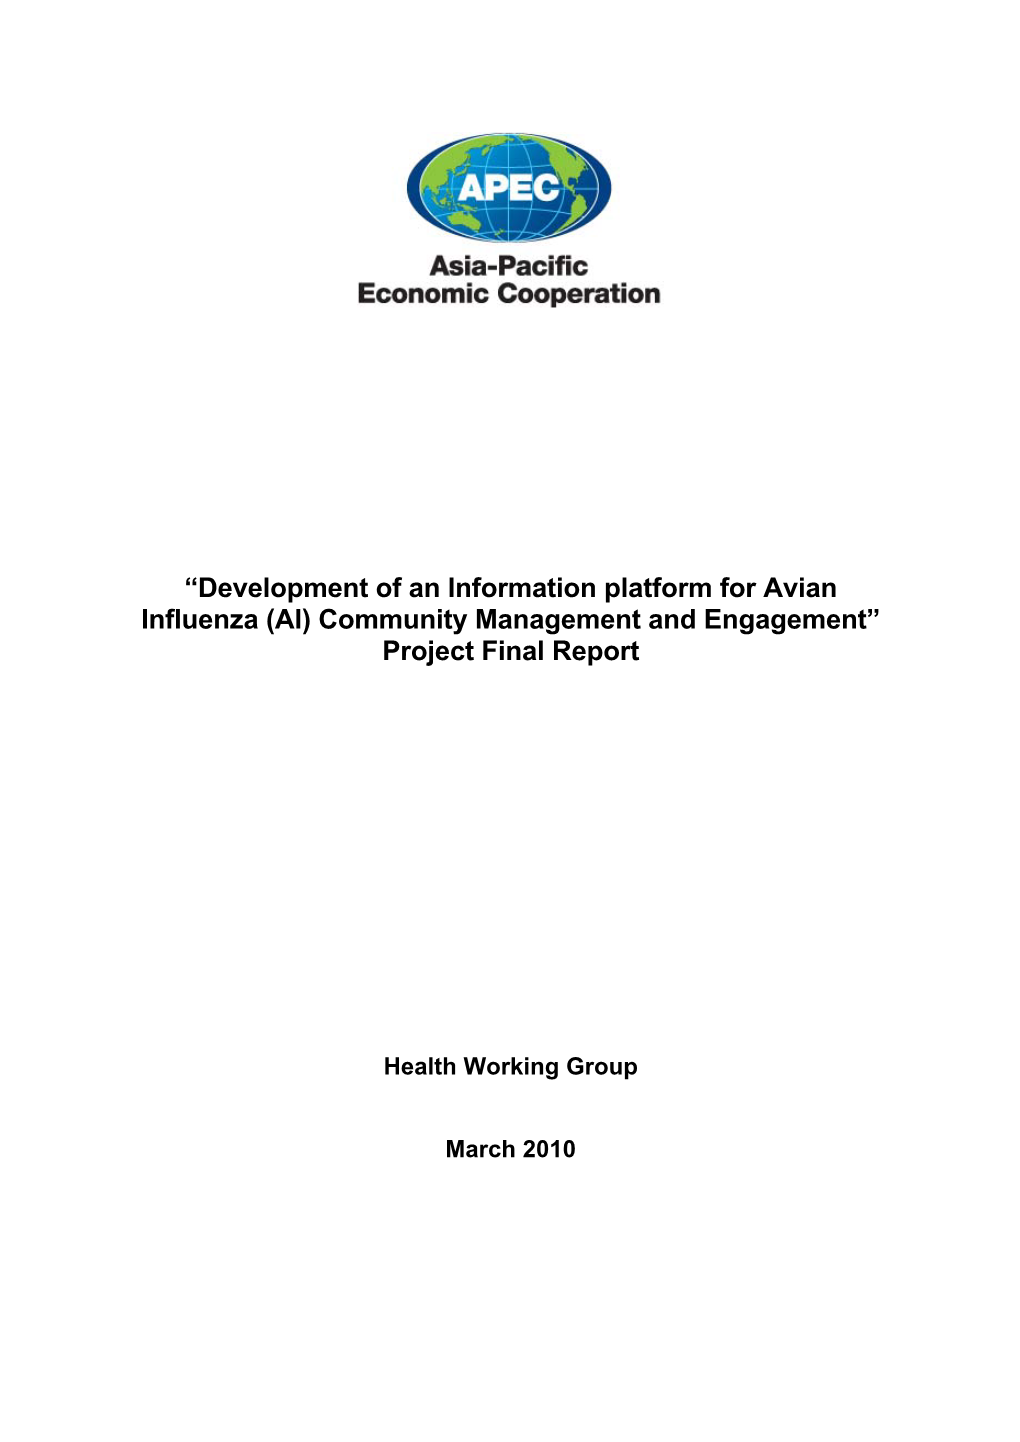 “Development of an Information Platform for Avian Influenza (AI) Community Management and Engagement” Project Final Report